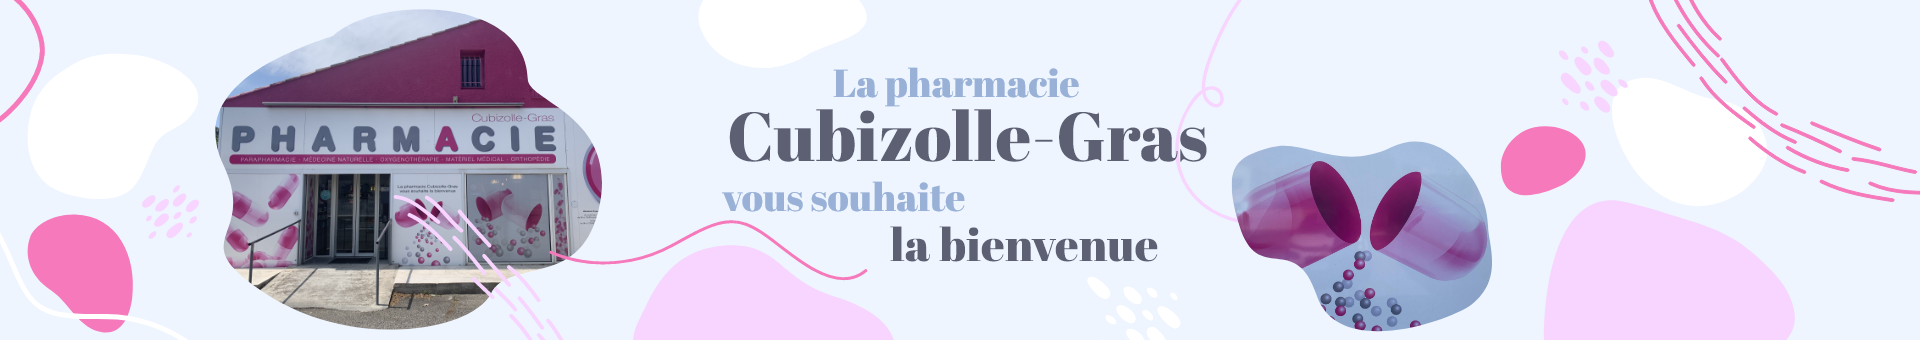 Pharmacie Cubizolle Gras,Sauvian